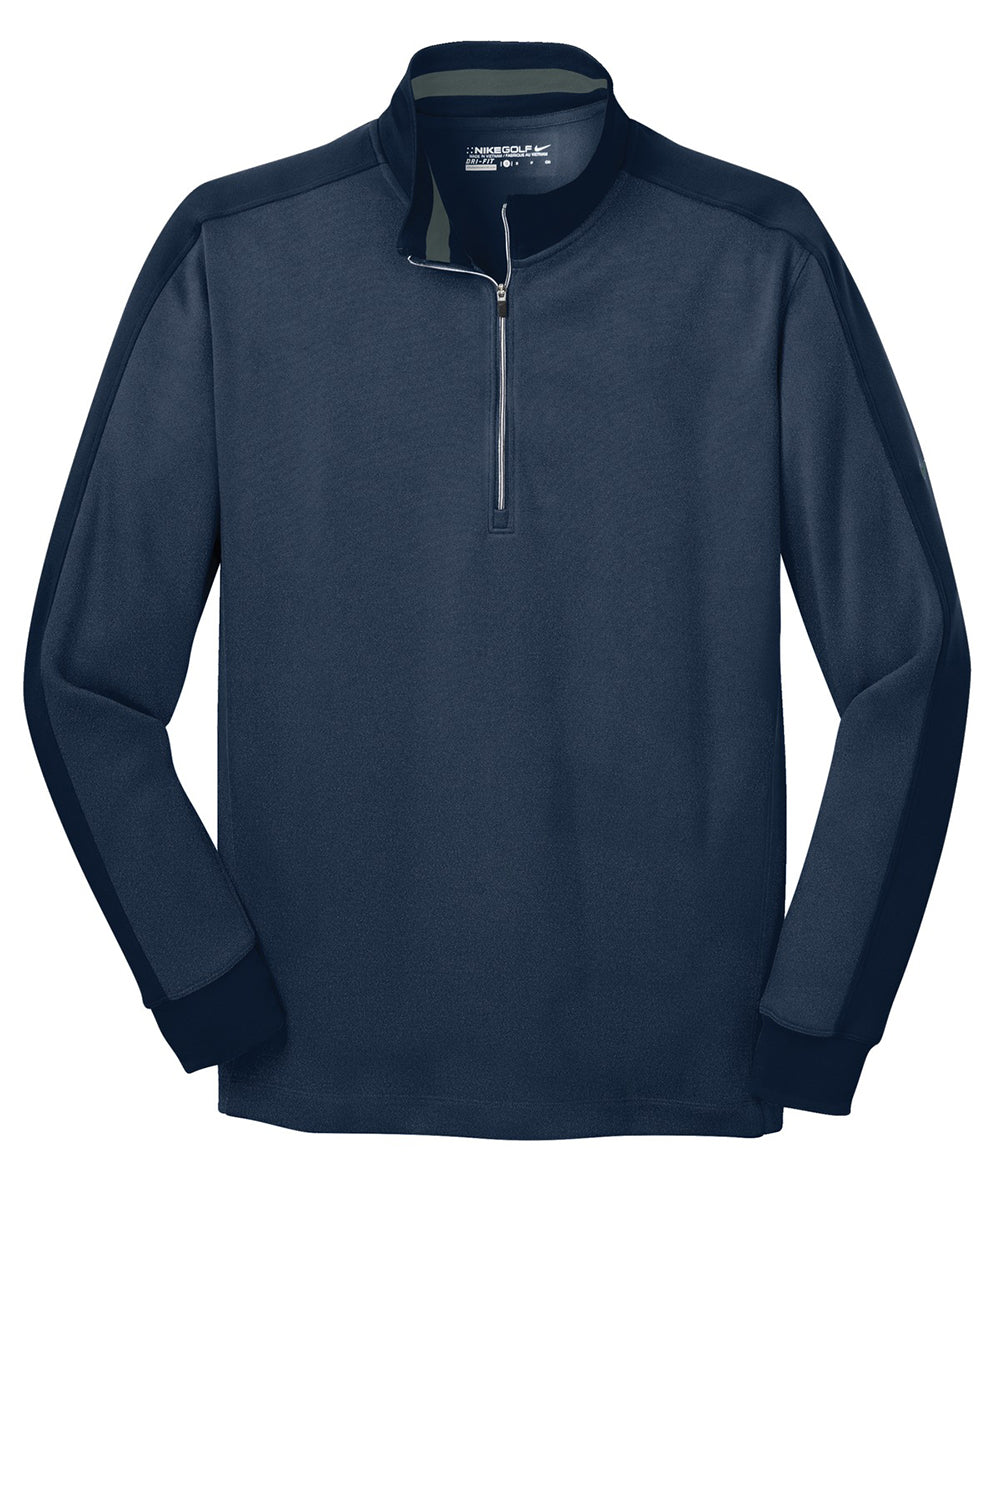 Nike 578673 Mens Dri-Fit Moisture Wicking 1/4 Zip Sweatshirt Heather Navy Blue/Navy Blue Flat Front